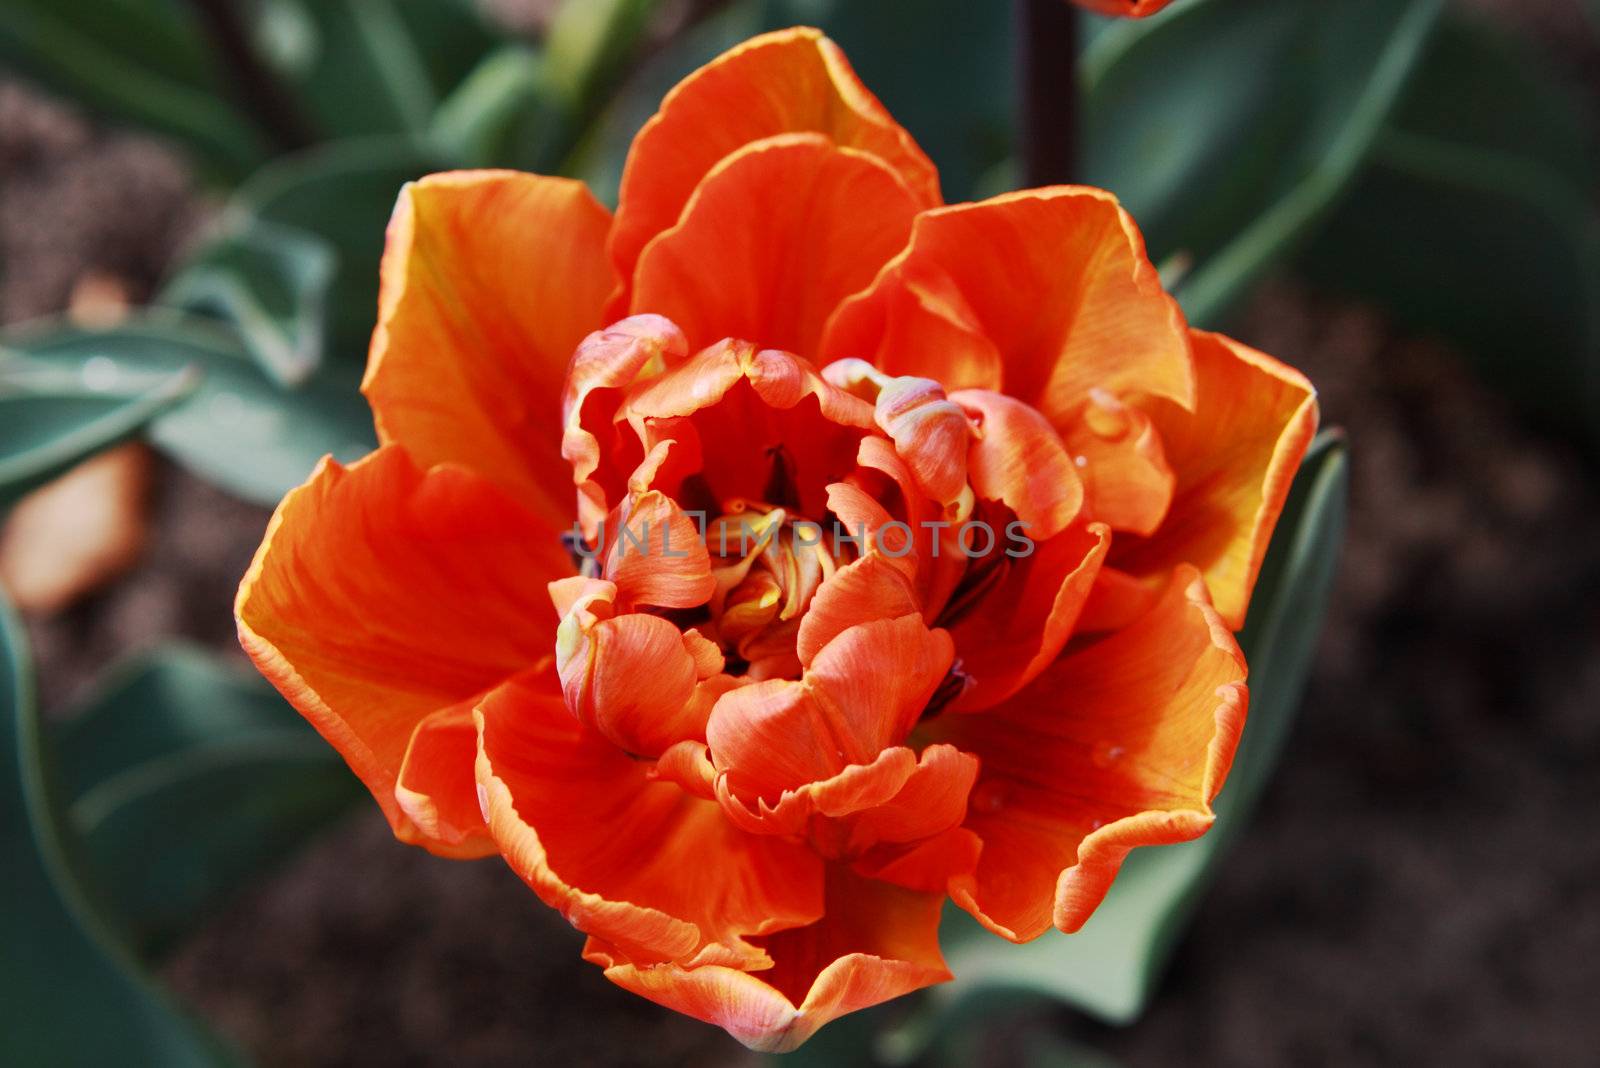 tulip "Orange Princess" close up in the Keukenhof